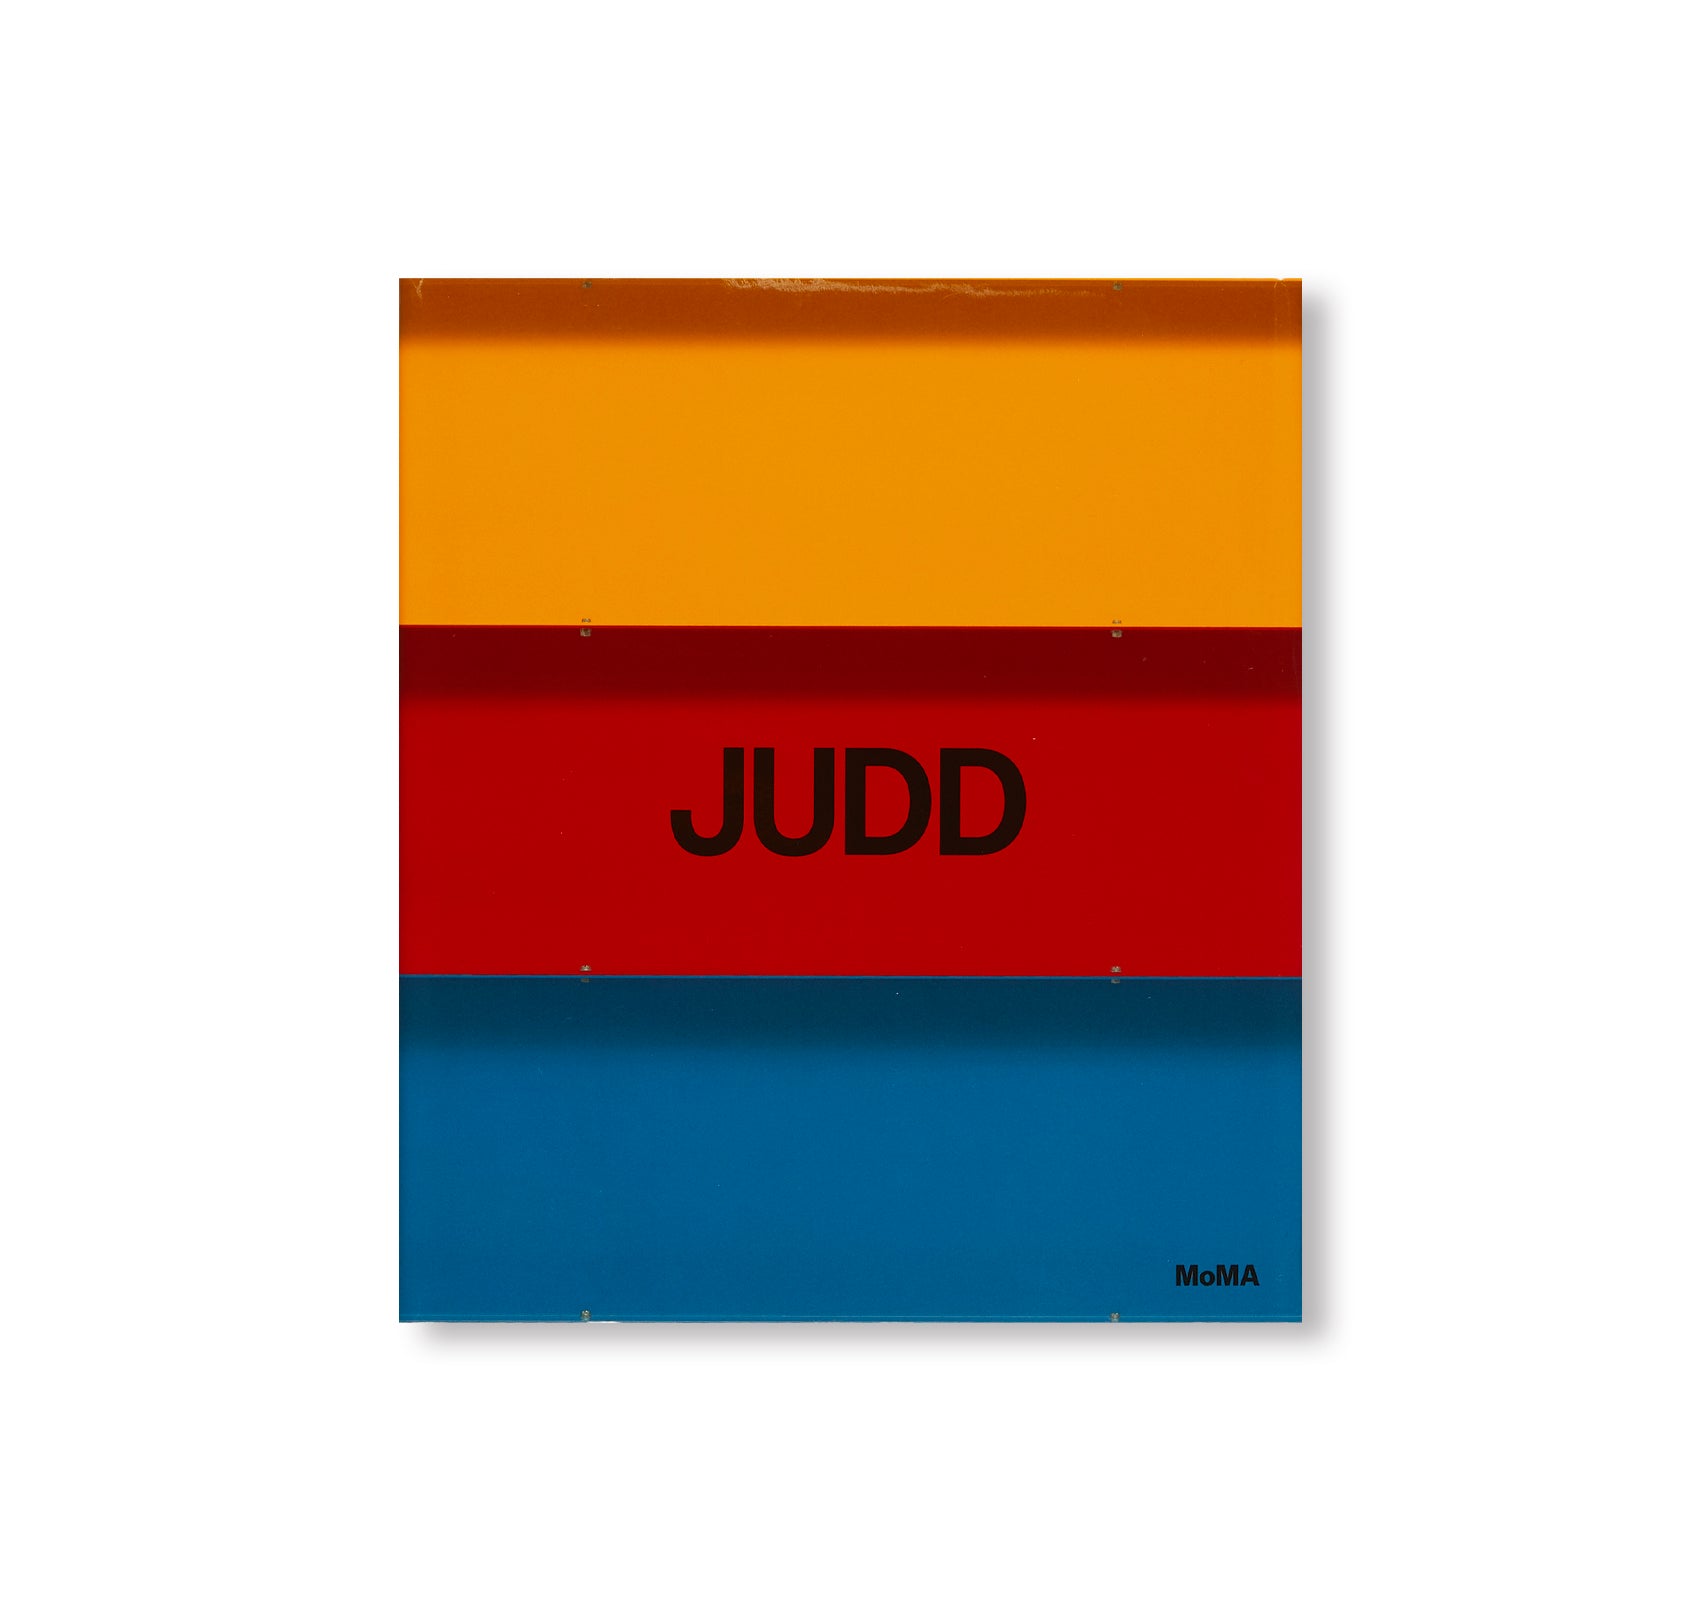 JUDD by Donald Judd